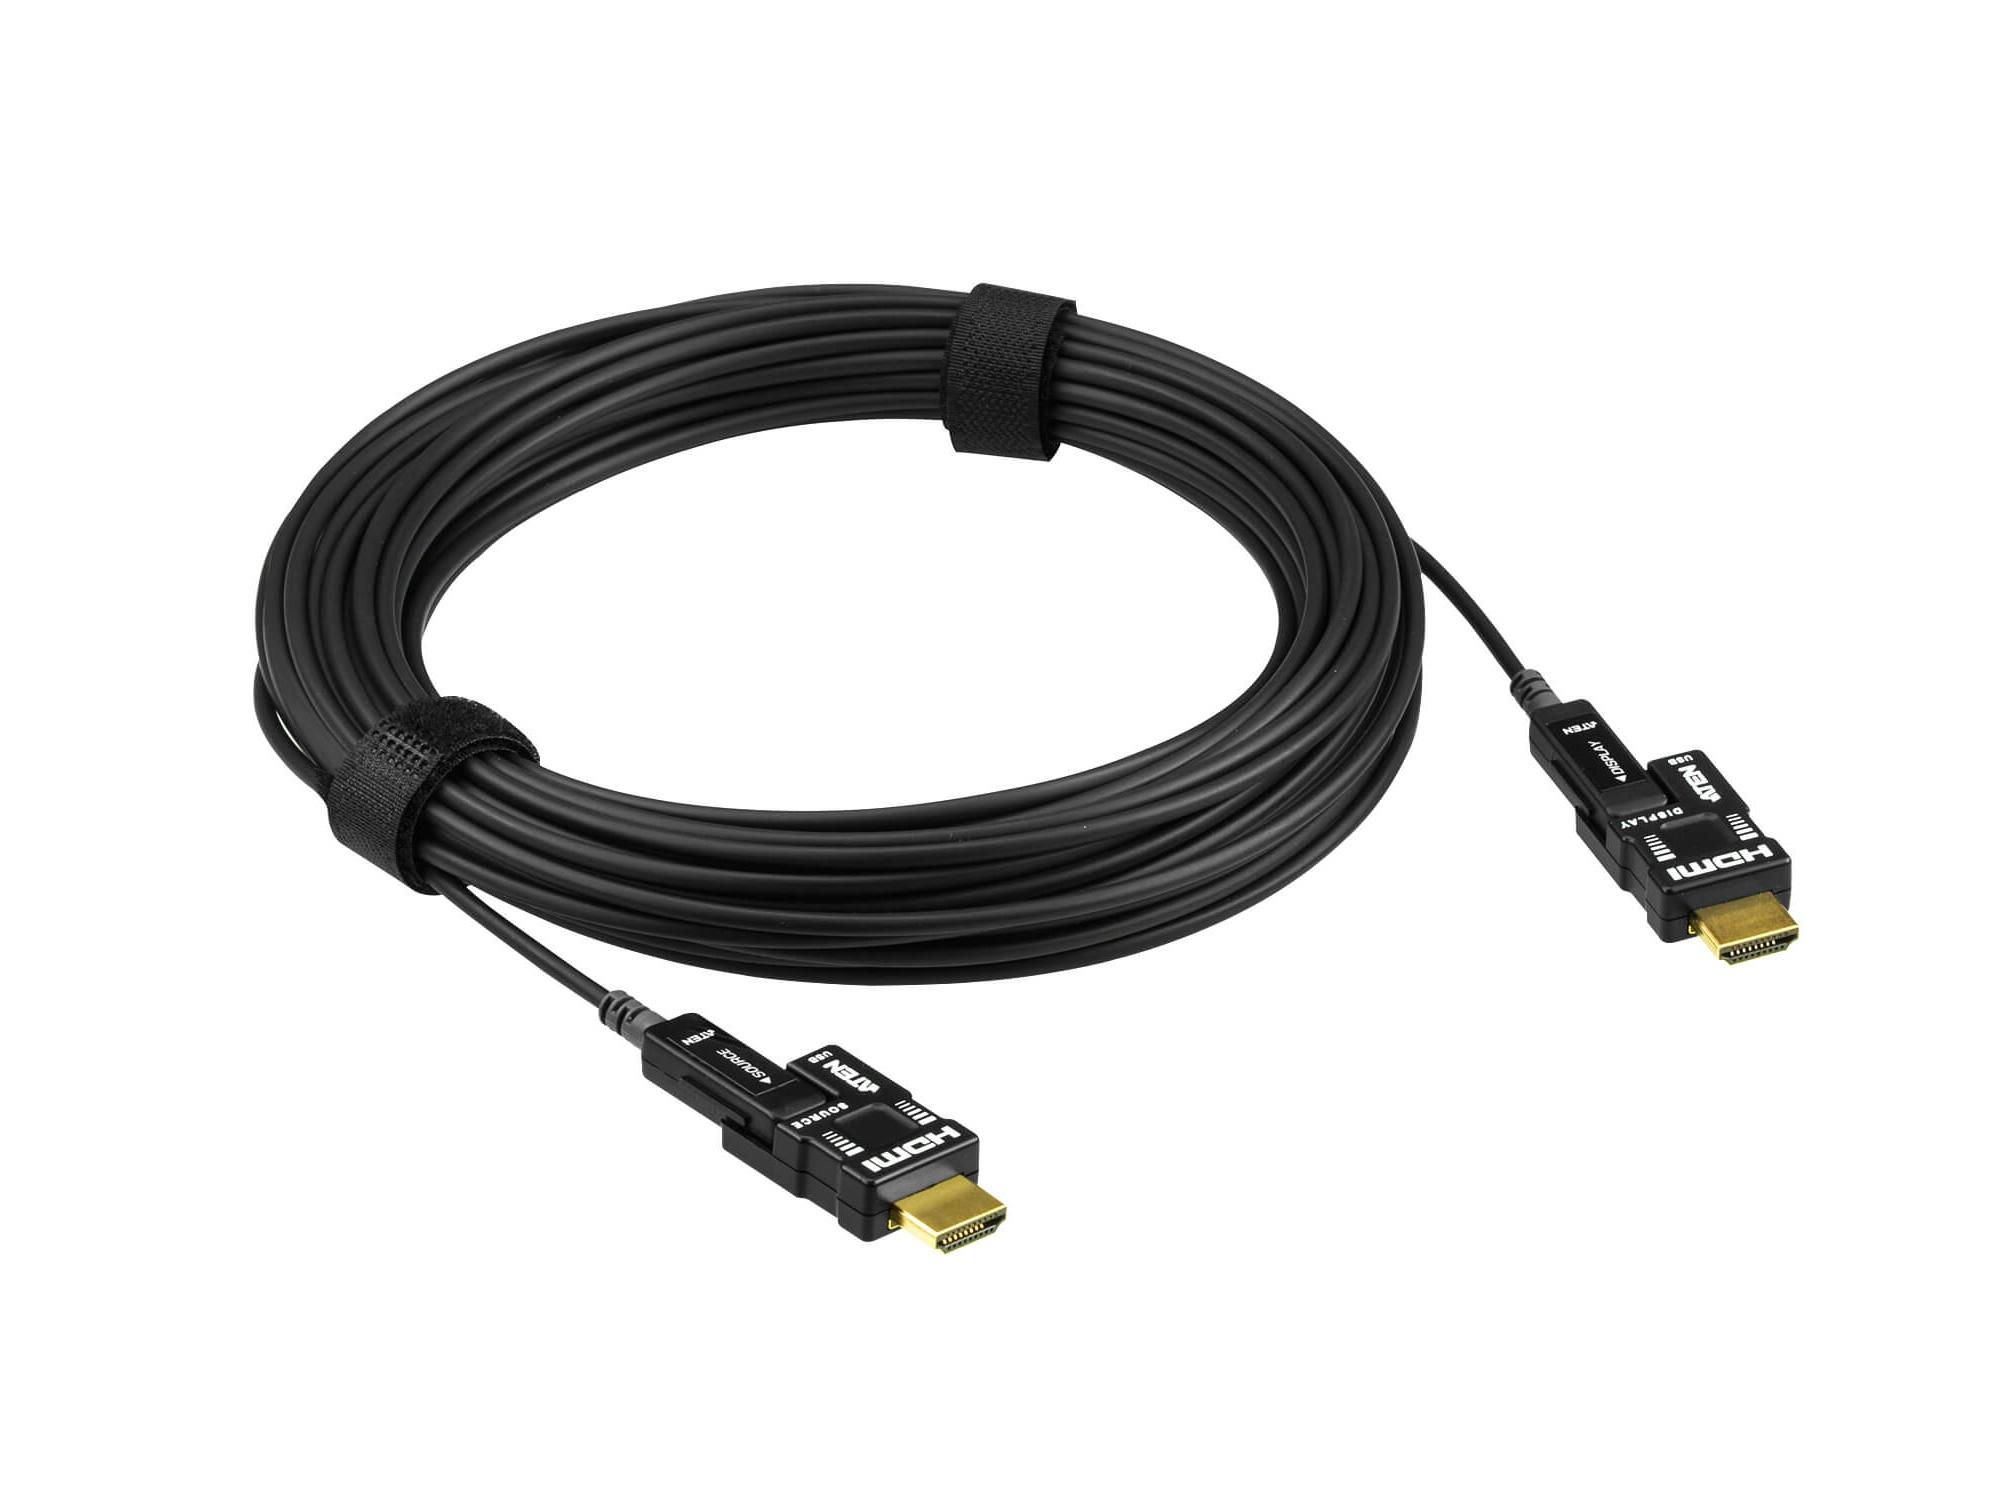 Aten VE7833 30m True 4K HDMI 2.0 Active Optical Cable